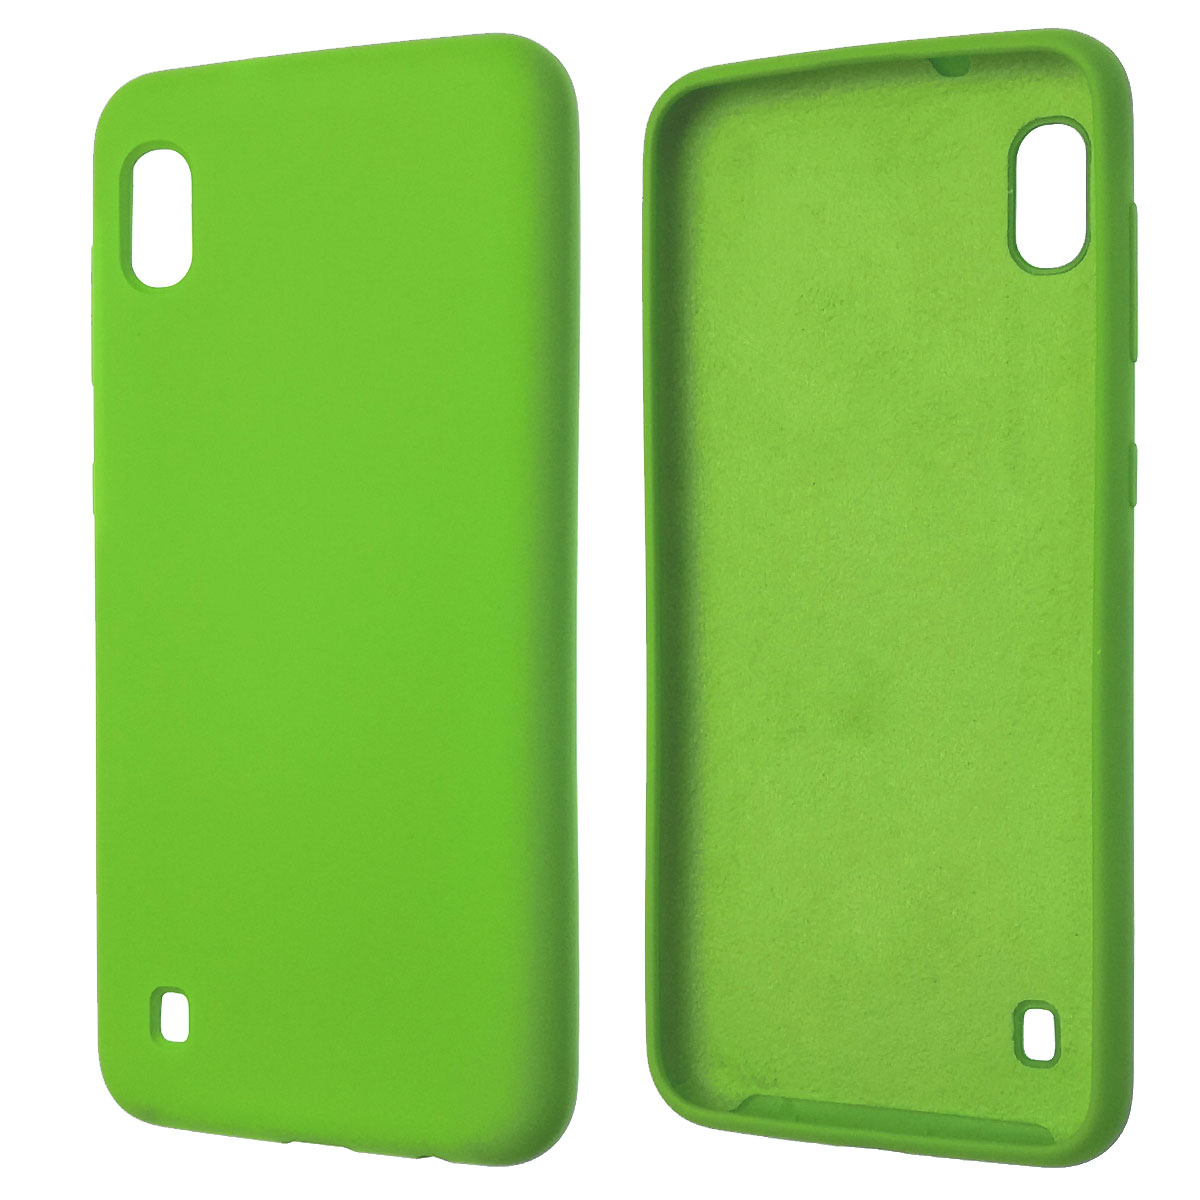 Чехол накладка Silicon Cover для Samsung A10 2019 (SM-A105), силикон, бархат, цвет зеленый.